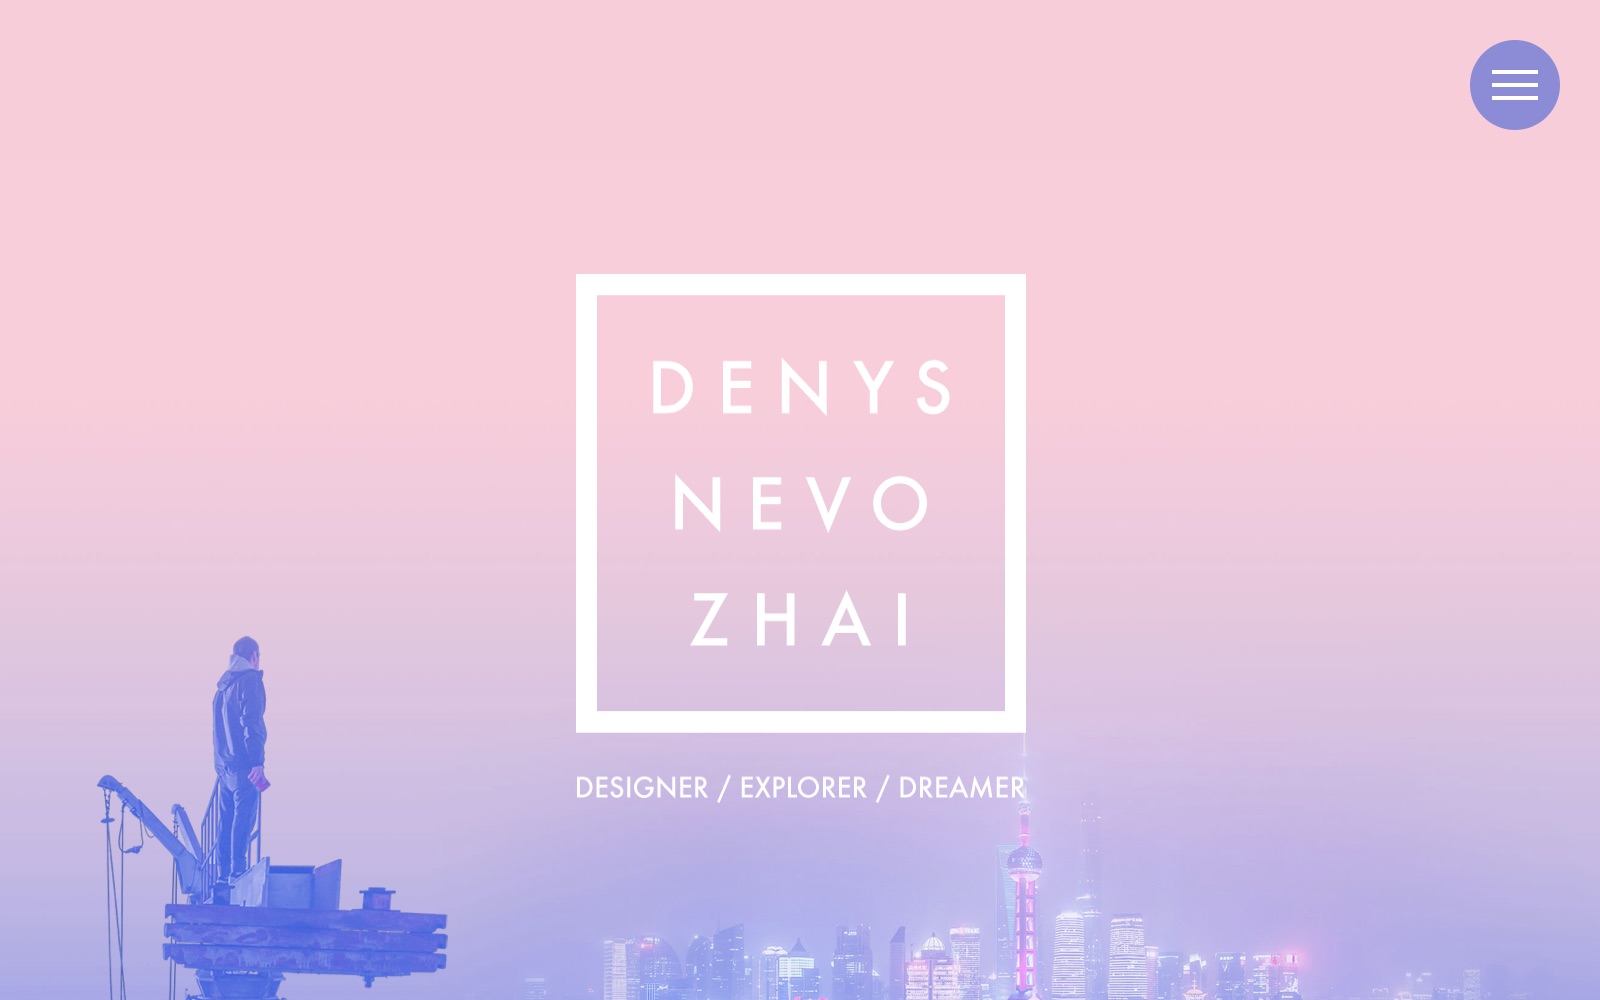 Denys Nevozhai is a Ukrainian product designer living in Shanghai